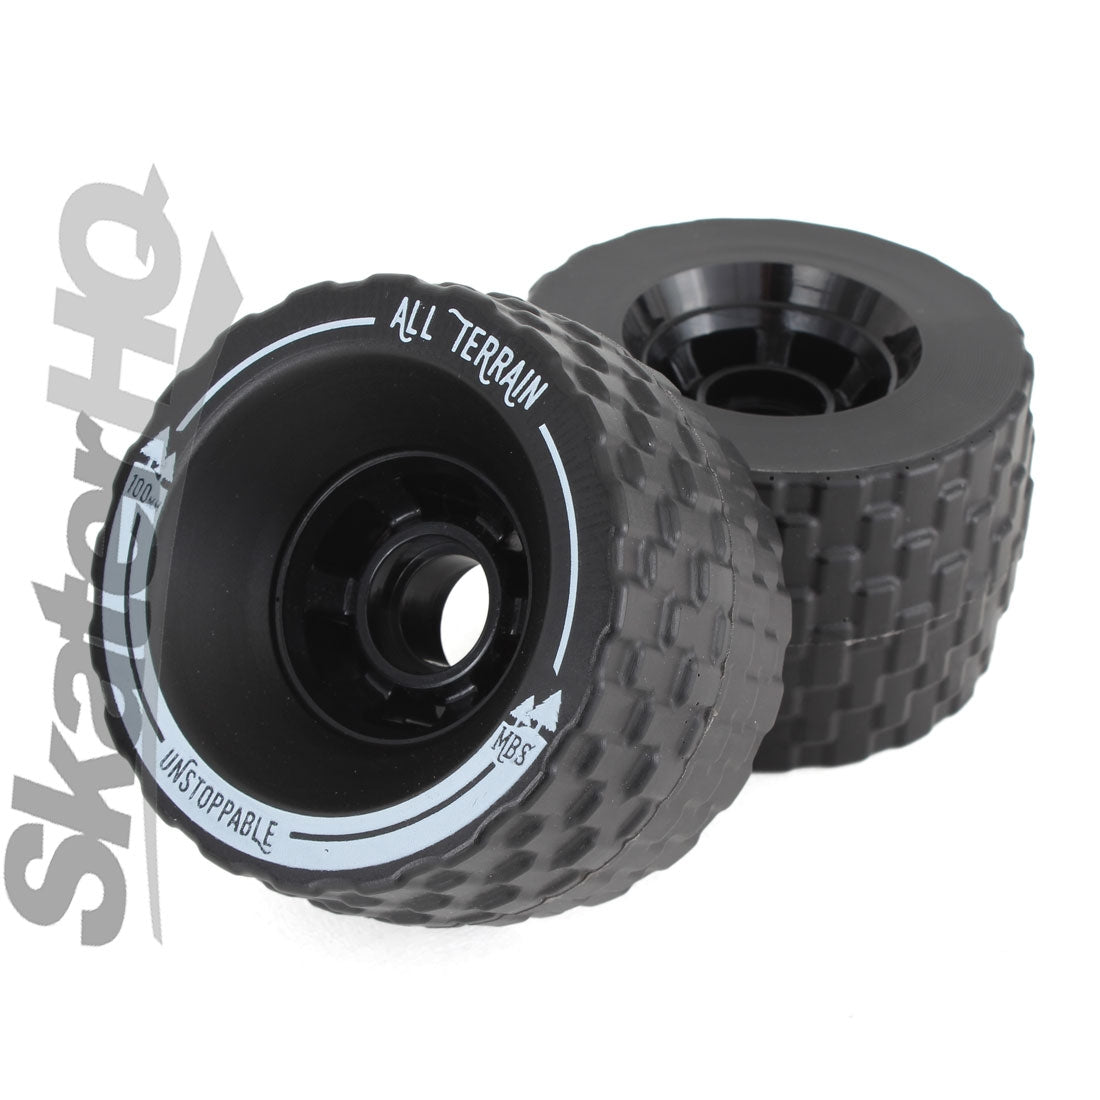 MBS All-Terrain 100mm Wheels 4pk - Black Skateboard Wheels